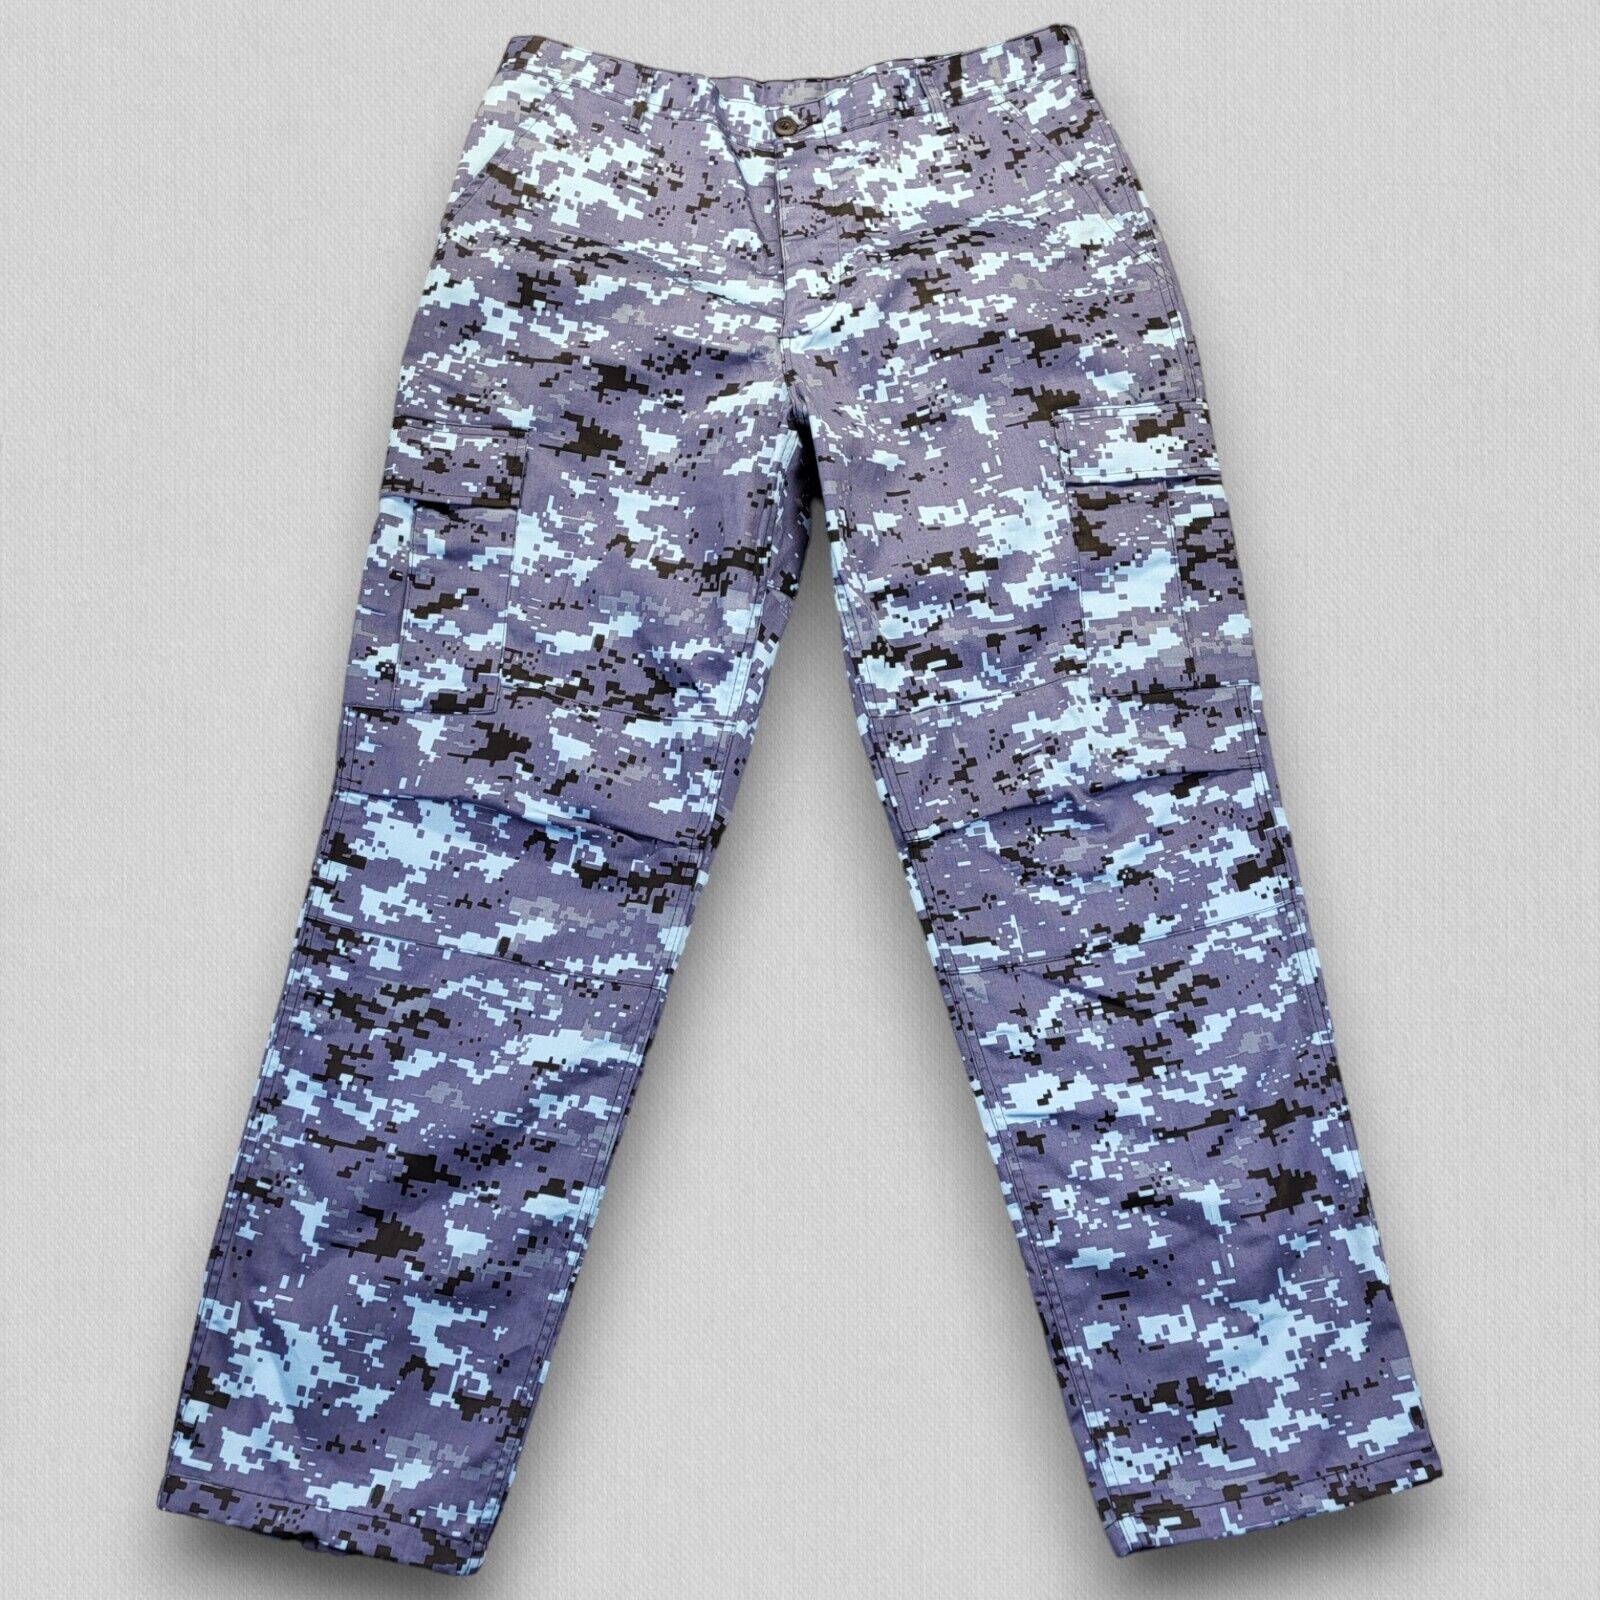 Rothco Military Combat BDU Uniform Pants Adult Large Blue Cargo Digital Camo